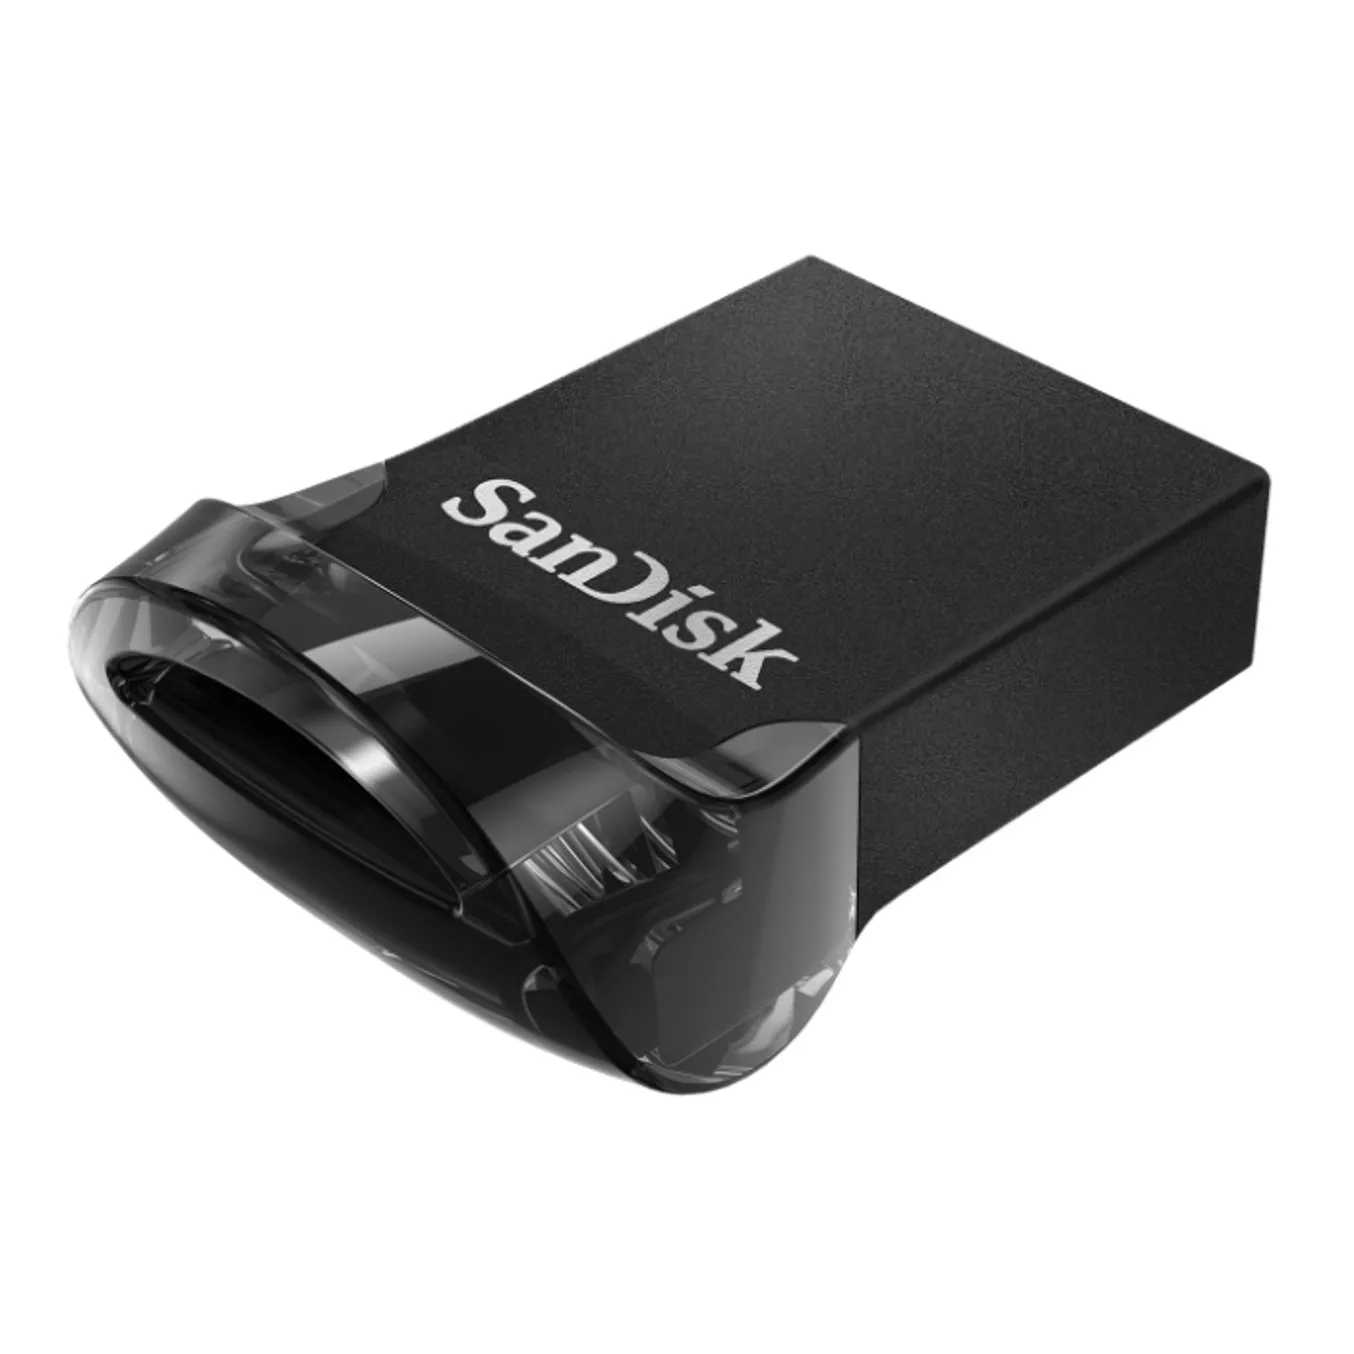 USB DISK 128 GB ULTRA FIT USB 3.1 SANDISK